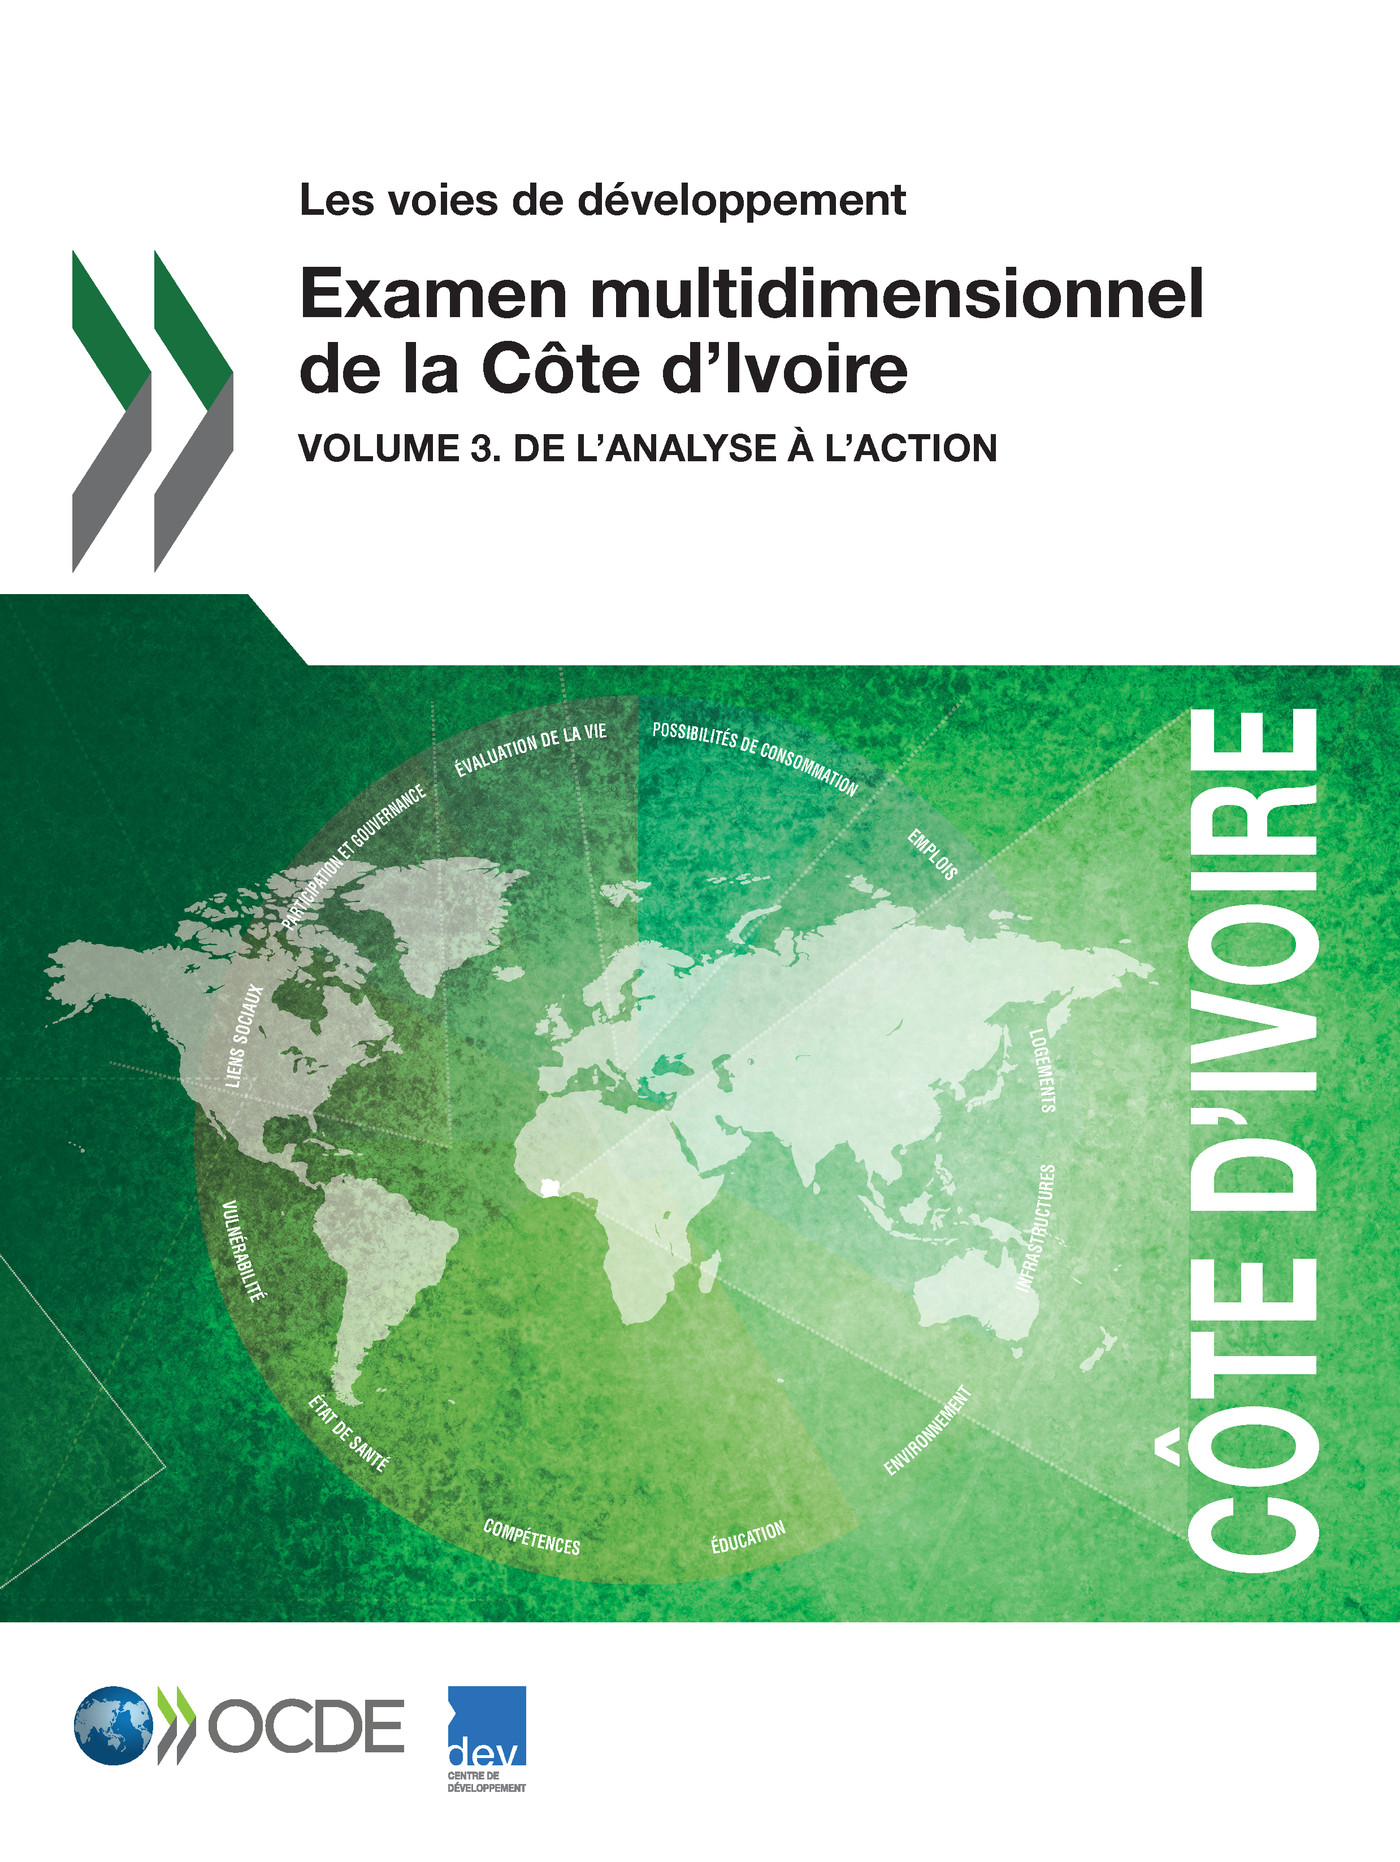 Examen multidimensionnel de la Côte d'Ivoire -  Collectif - OCDE / OECD